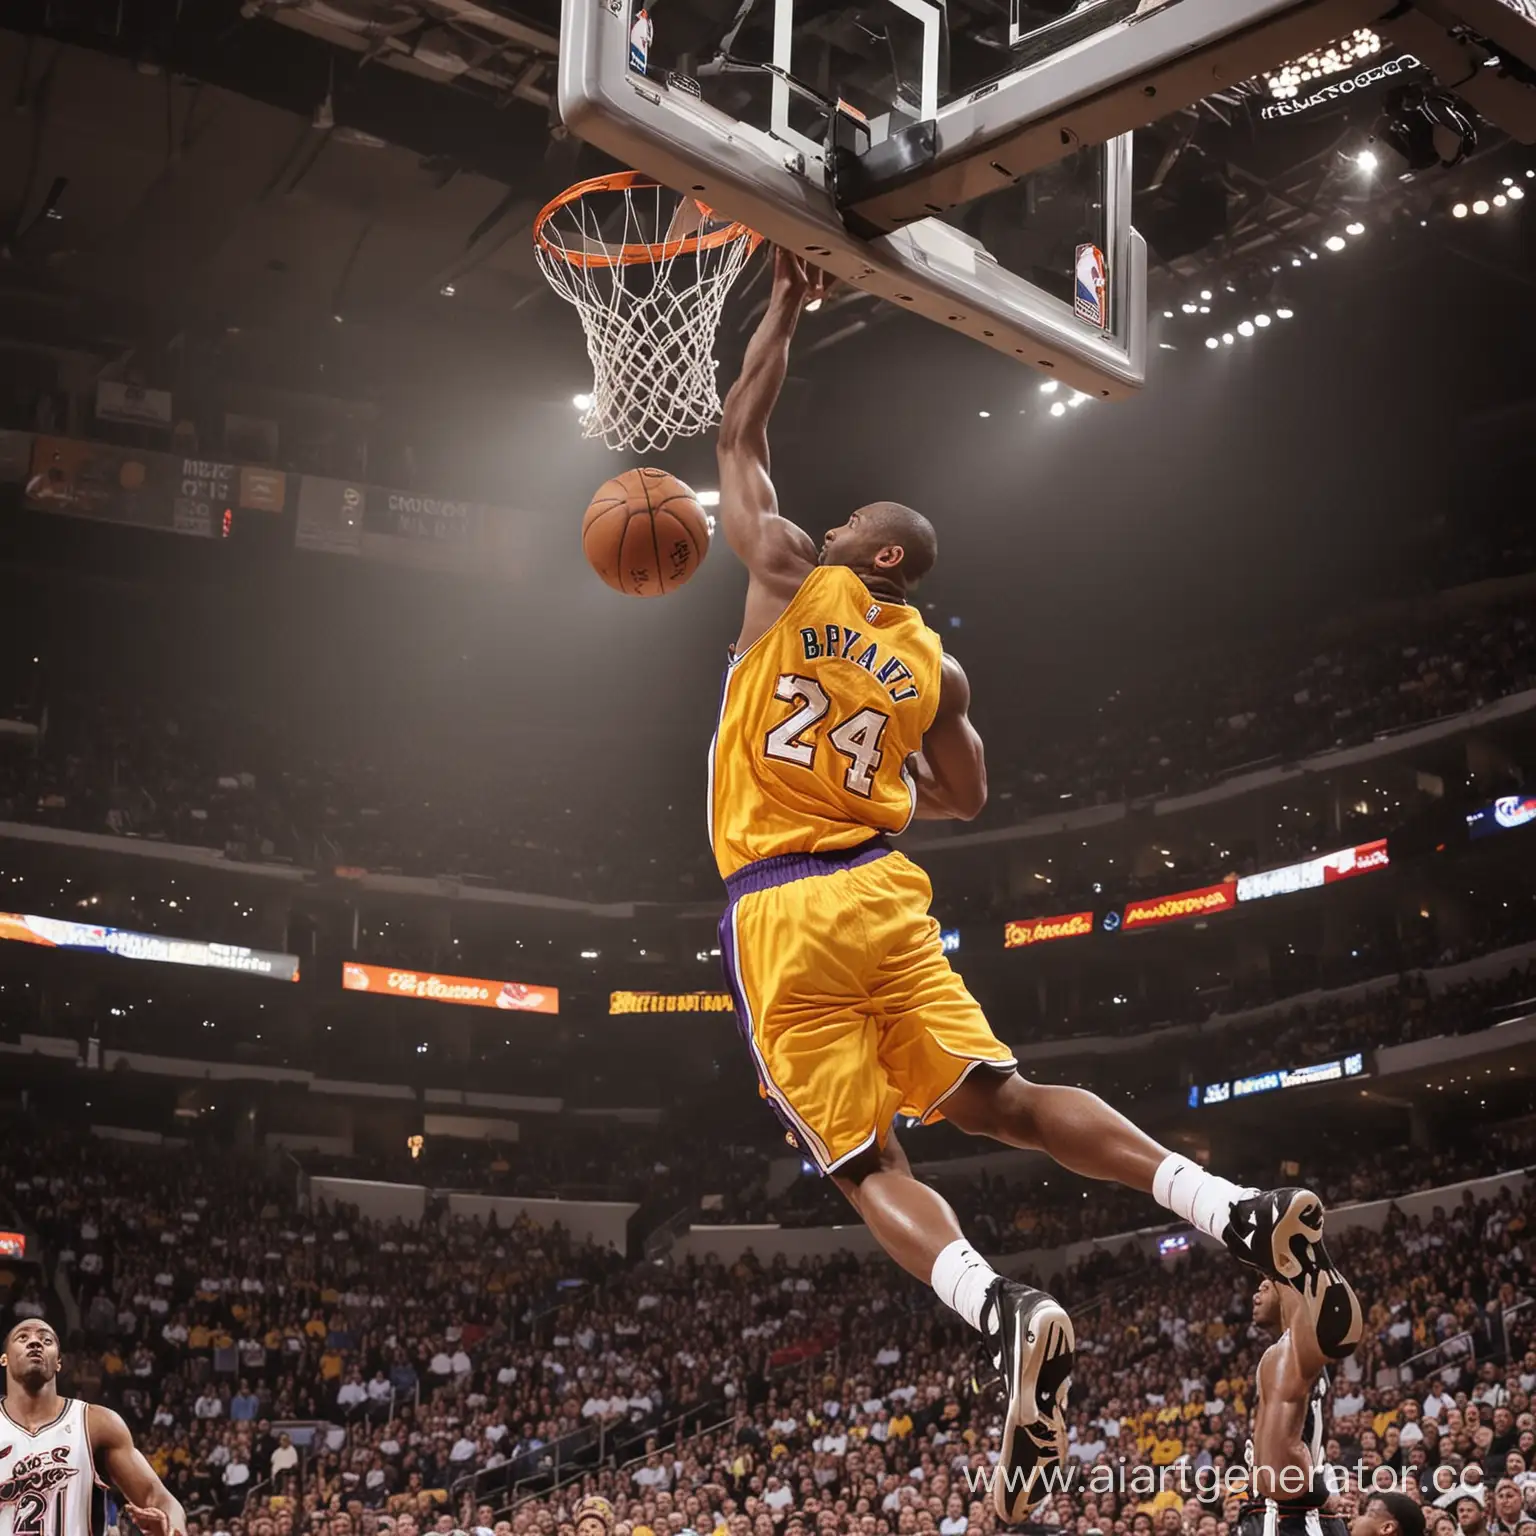 Kobe-Bryant-Monumental-Dunk-in-High-Definition-Action-Shot